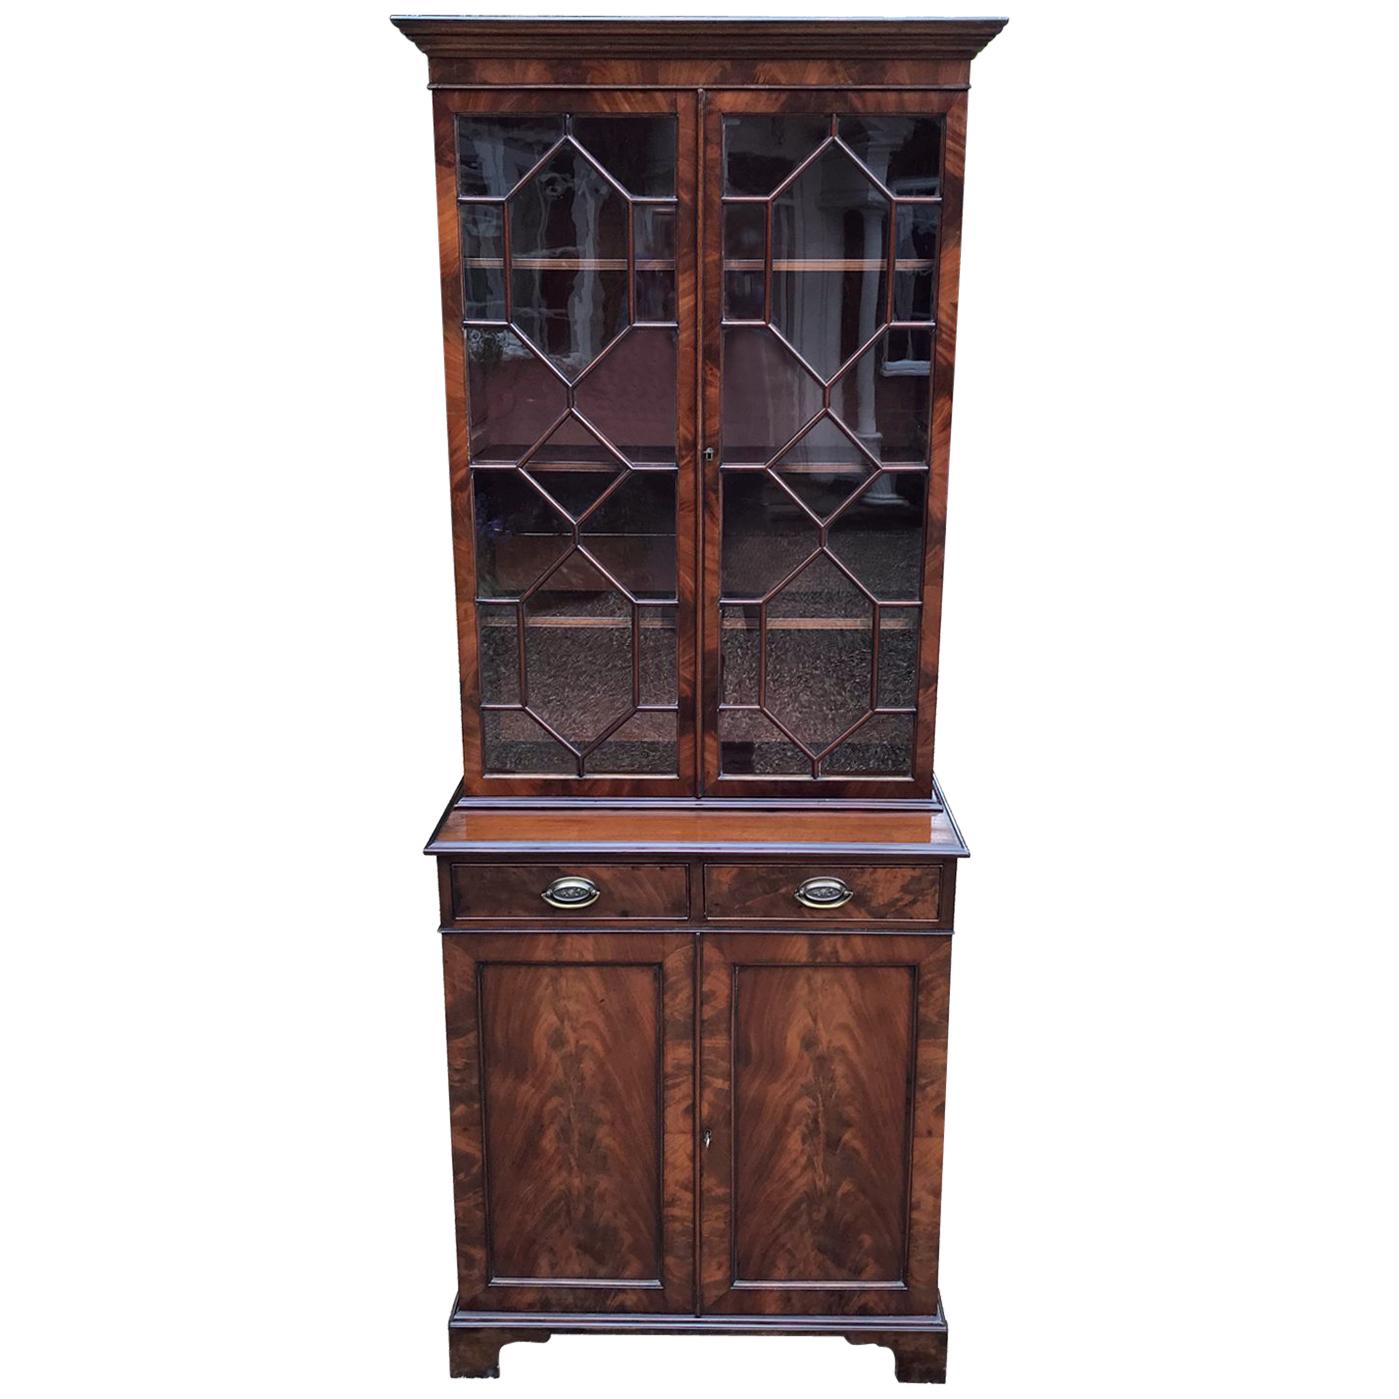 Victorian Mahogany Bookcase / Cupboard